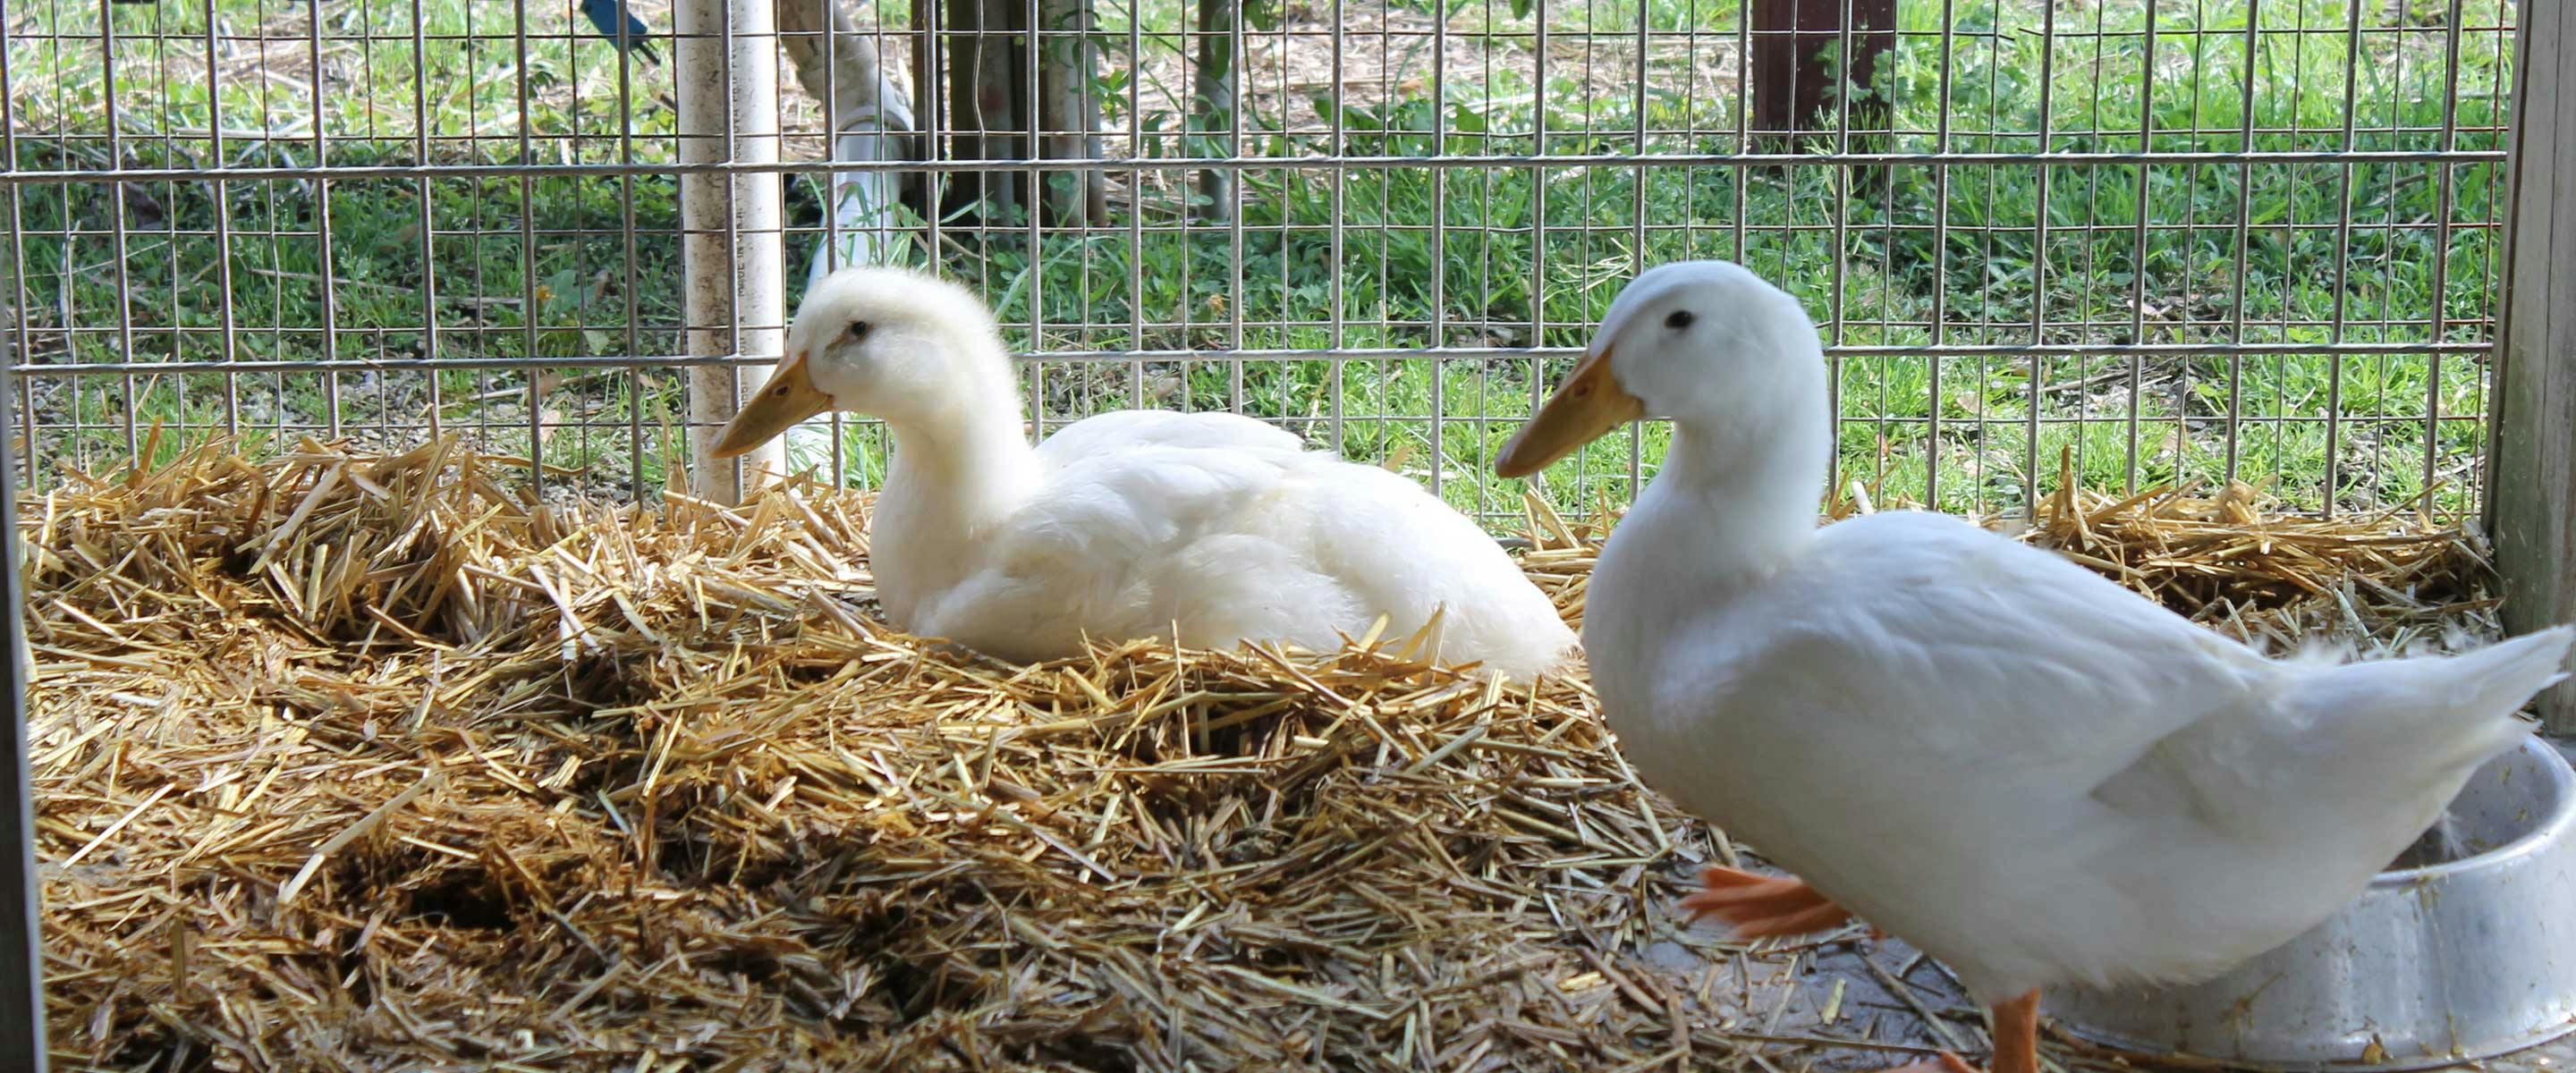 two white ducks enjoying the straw bed